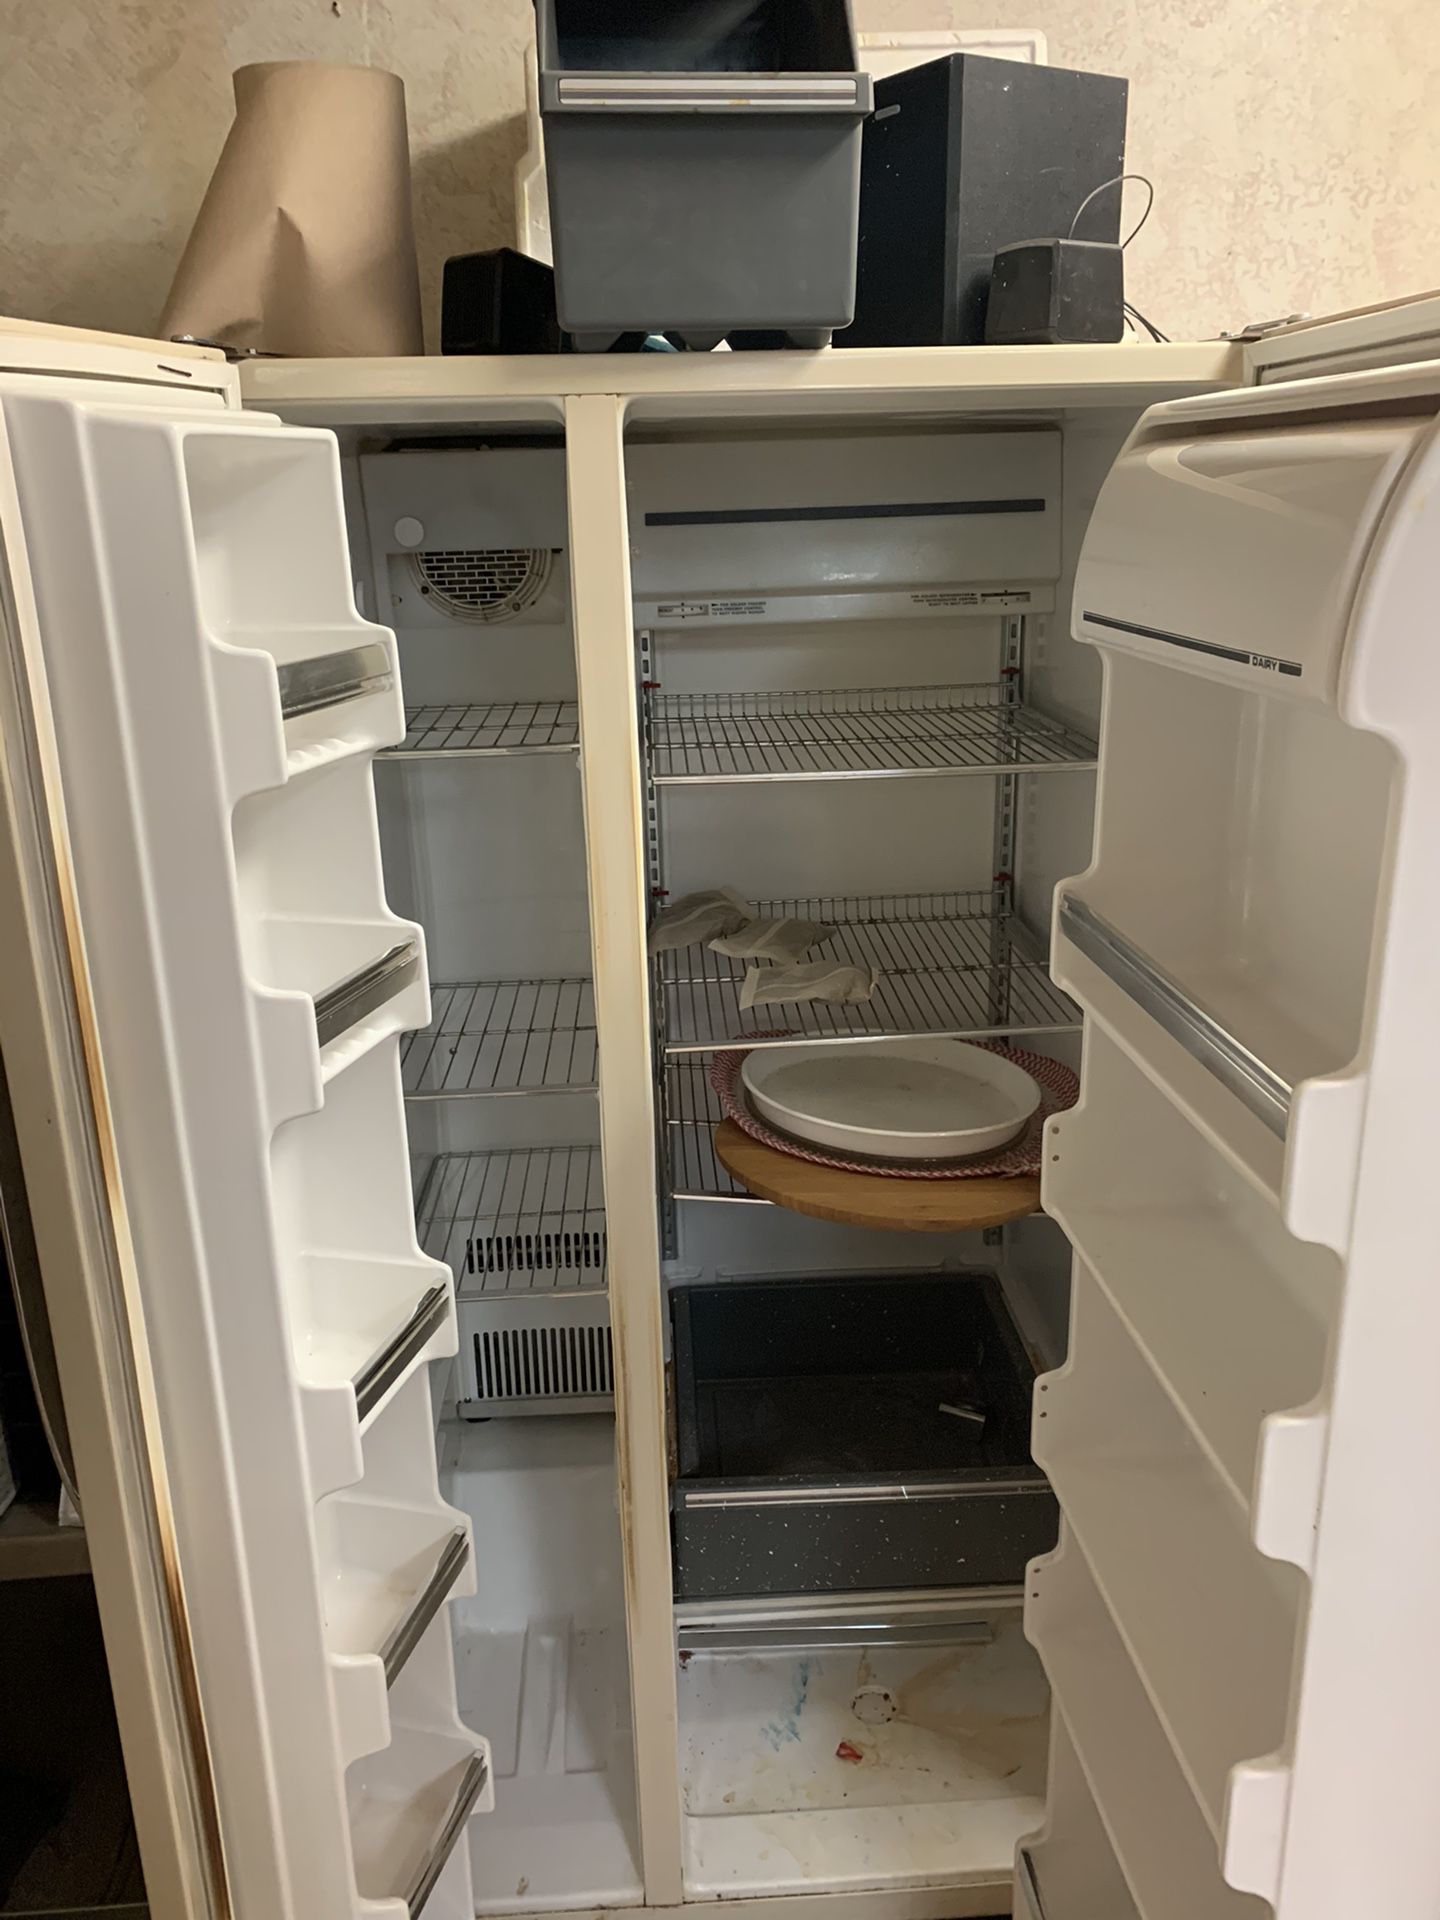 Refrigerator and freezer